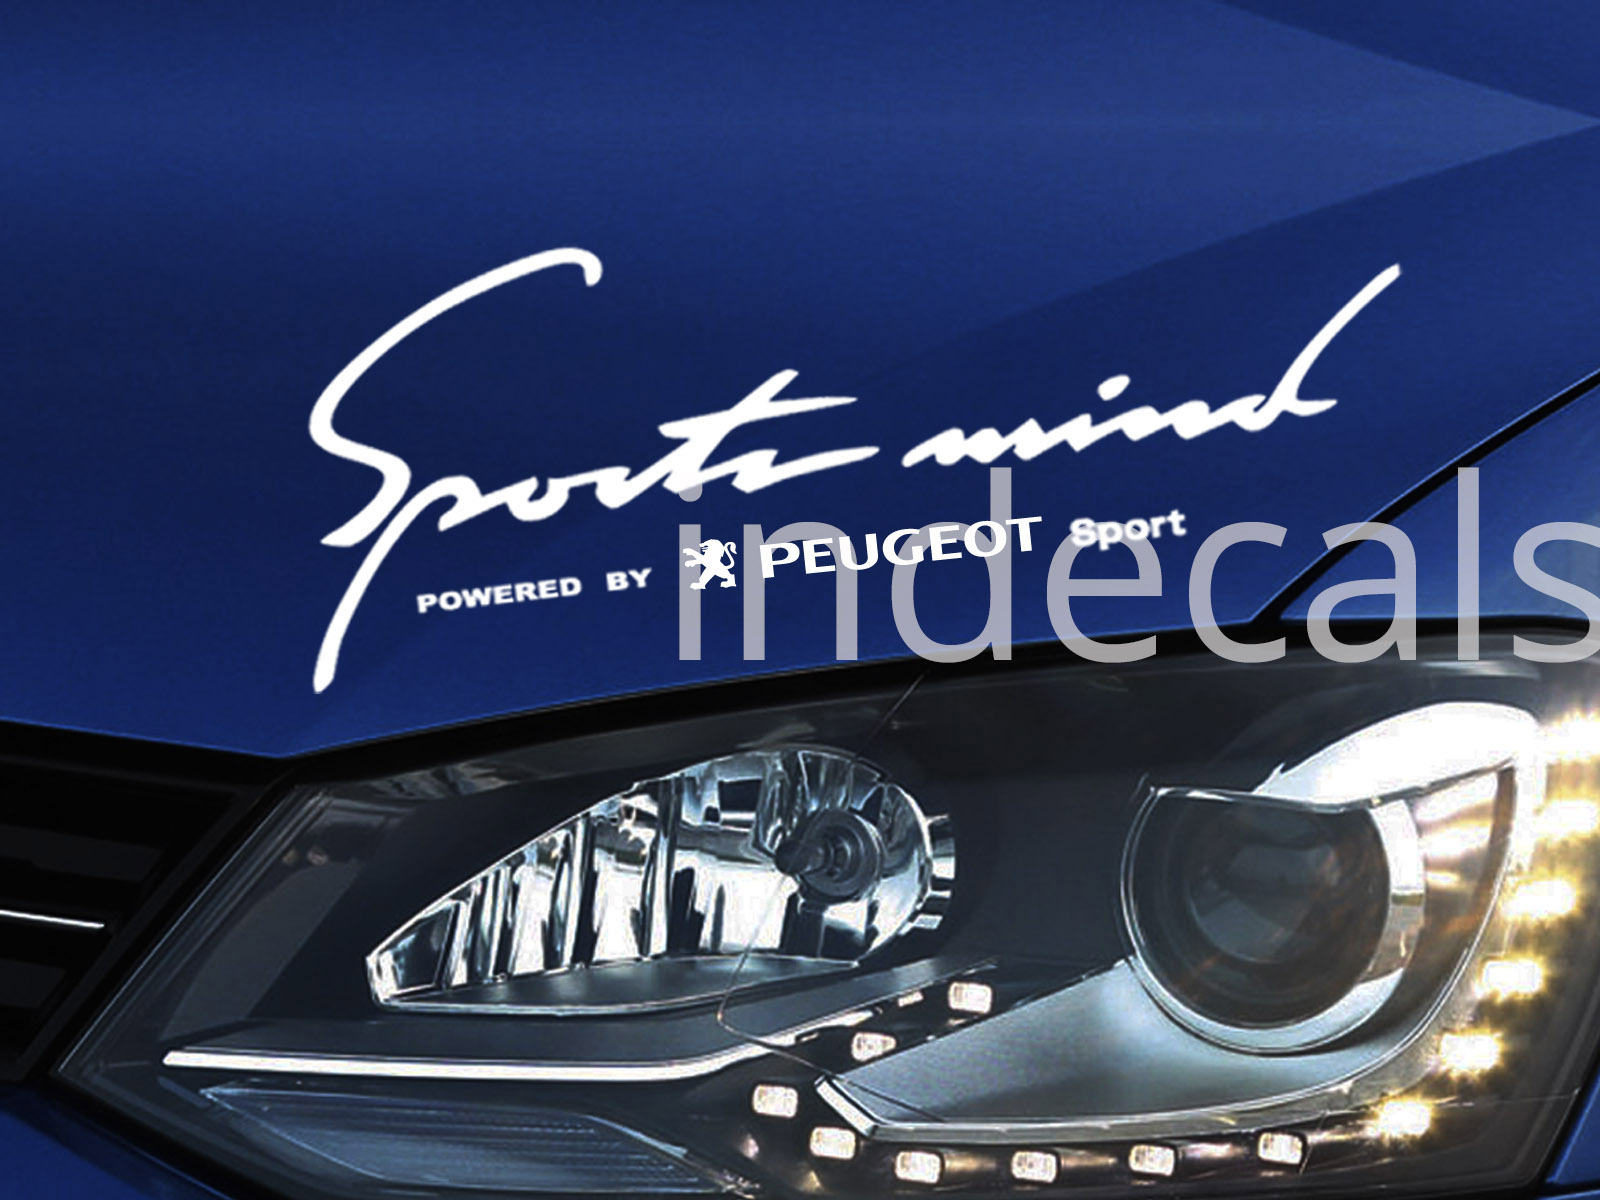 1 x Peugeot Sports Mind Sticker - White